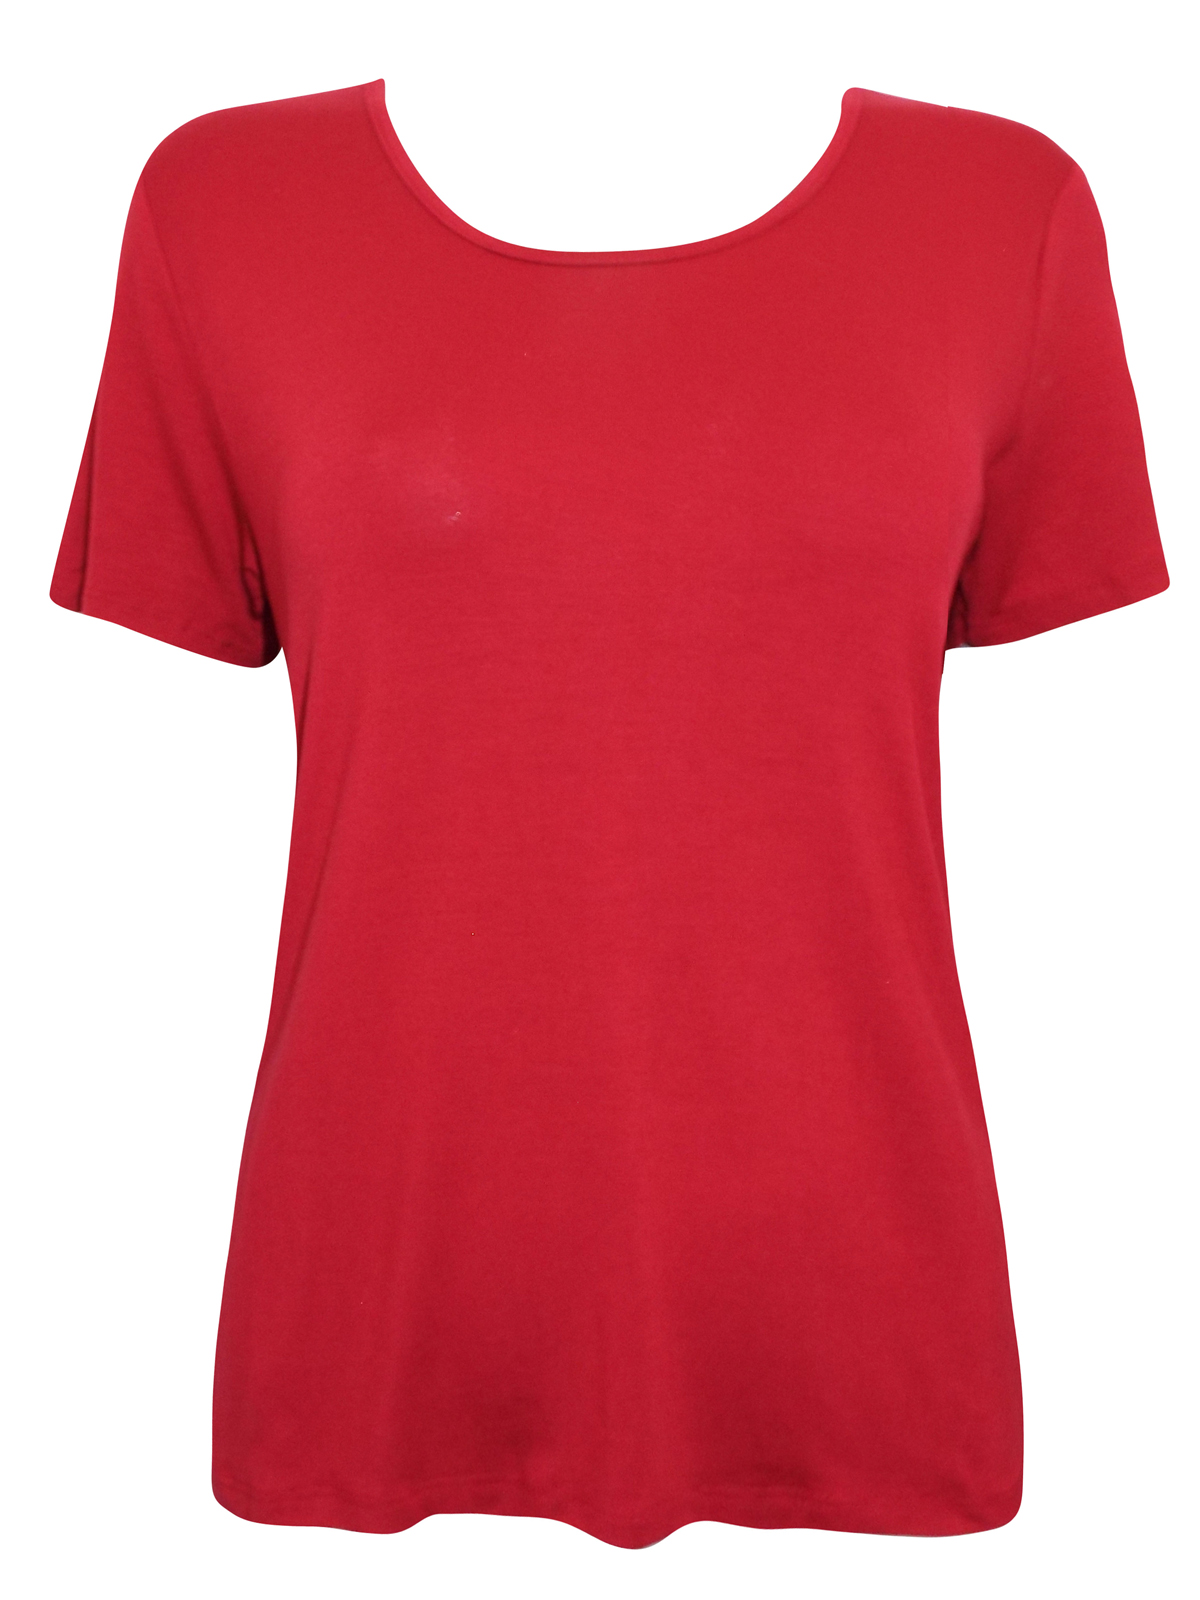 Drescott - - RED Short Sleeve Jersey Tee - Size XSmall to XXLarge